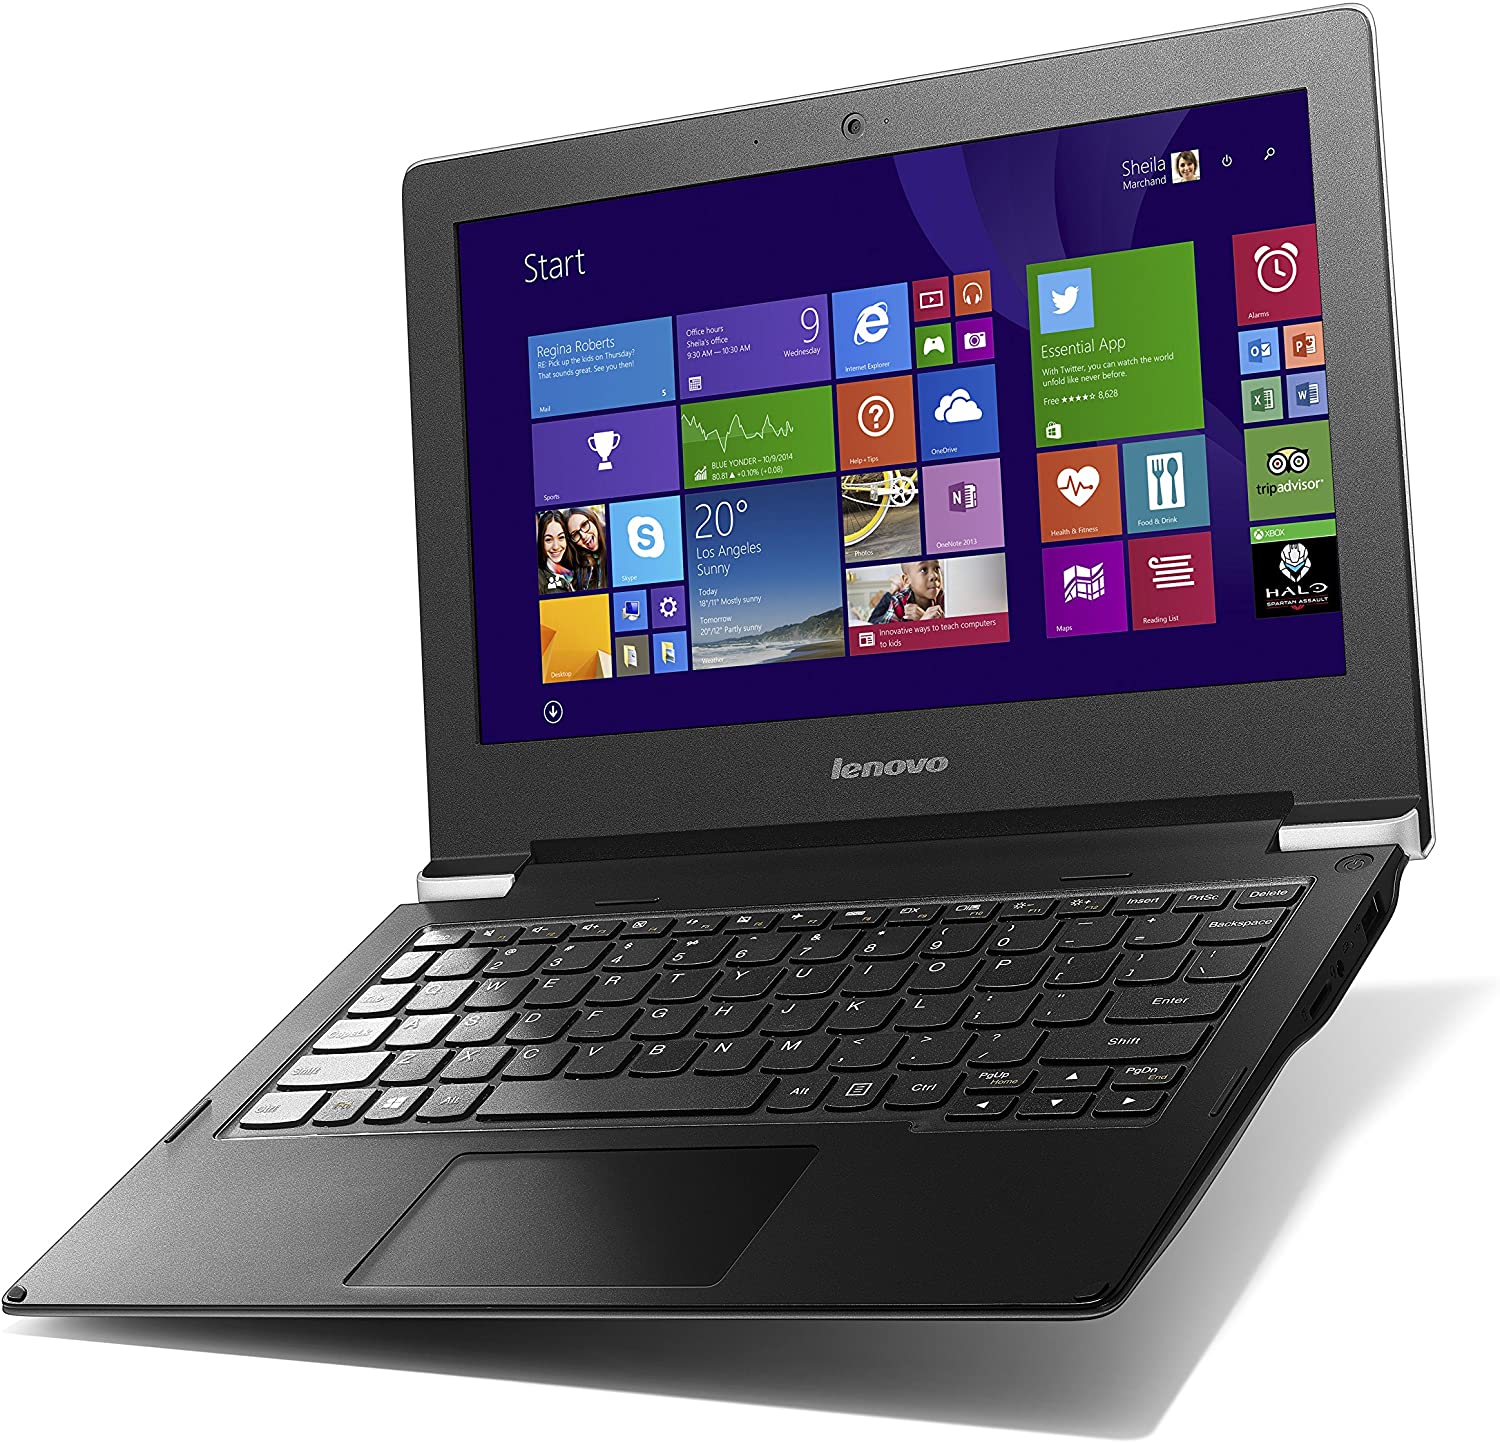 Lenovo S21e 11.6-Inch HD Notebook (Intel Celeron N2840 2.16 GHz, 2 GB RAM, 32 GB eMMC - Mini Notebooks